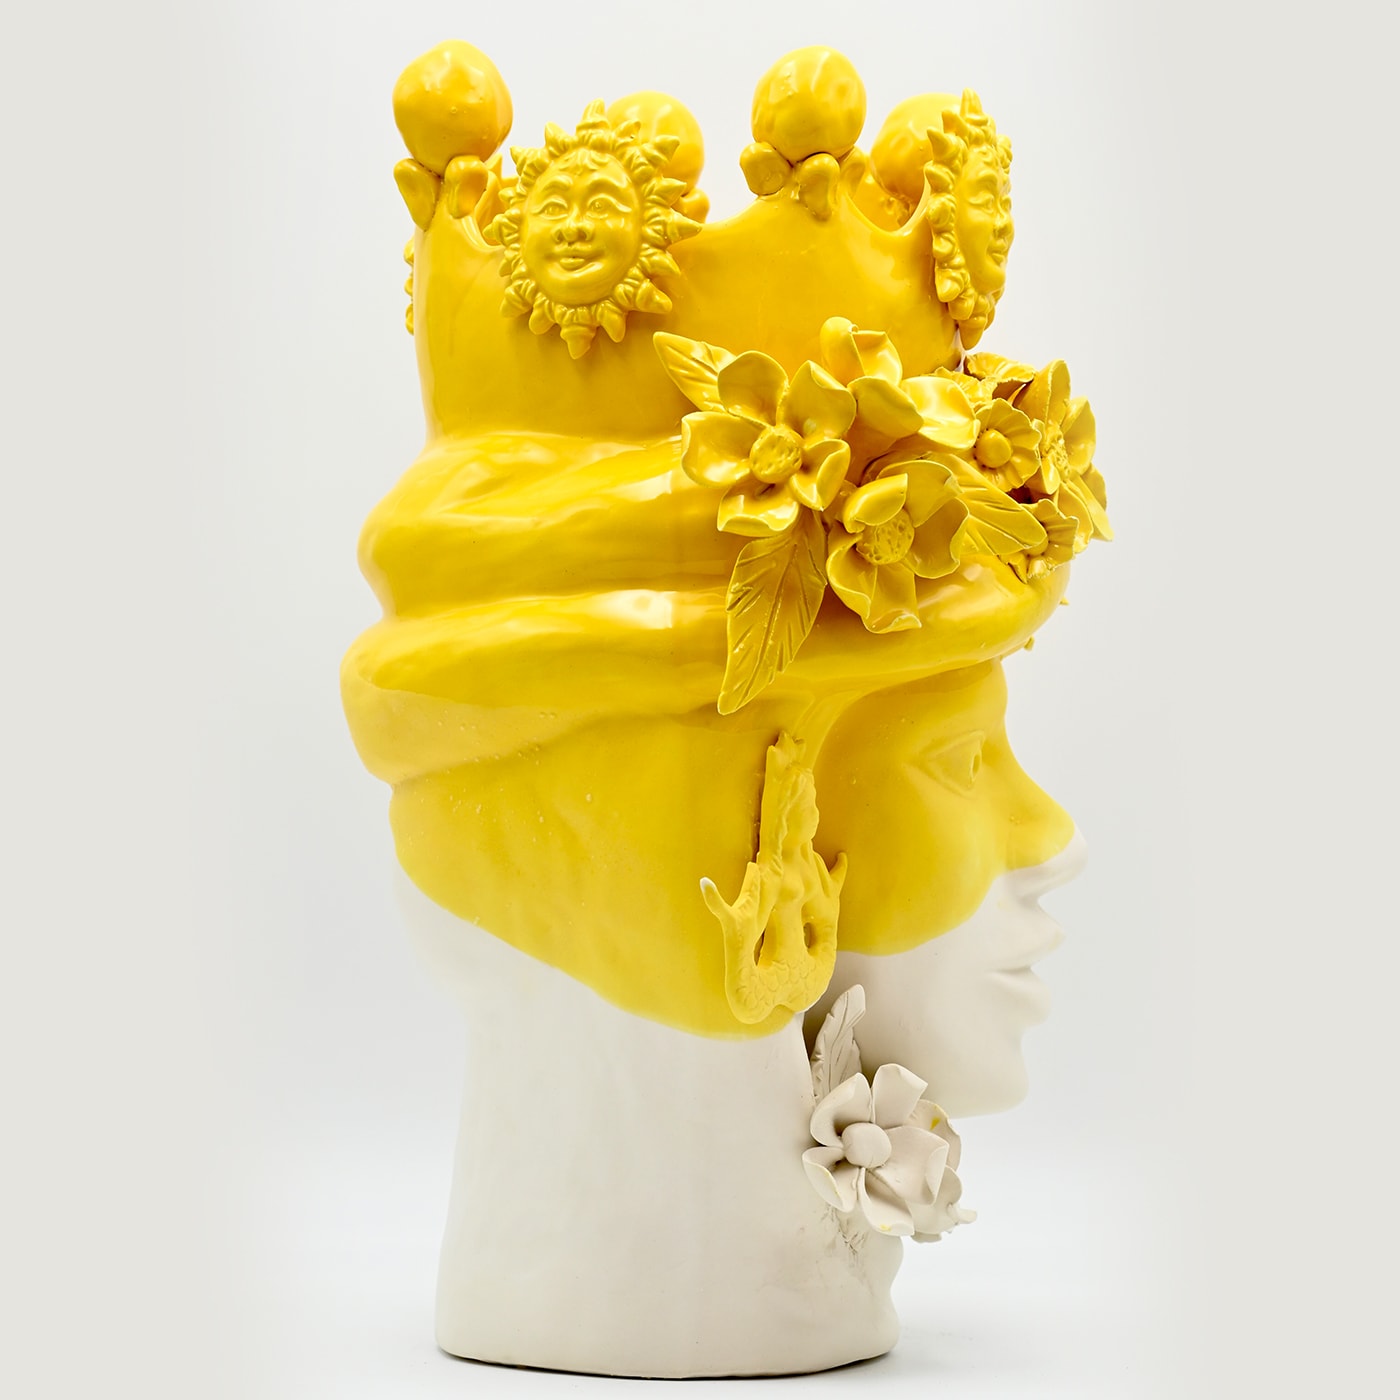 Moor's Head Gold & White Handmade Sculpture